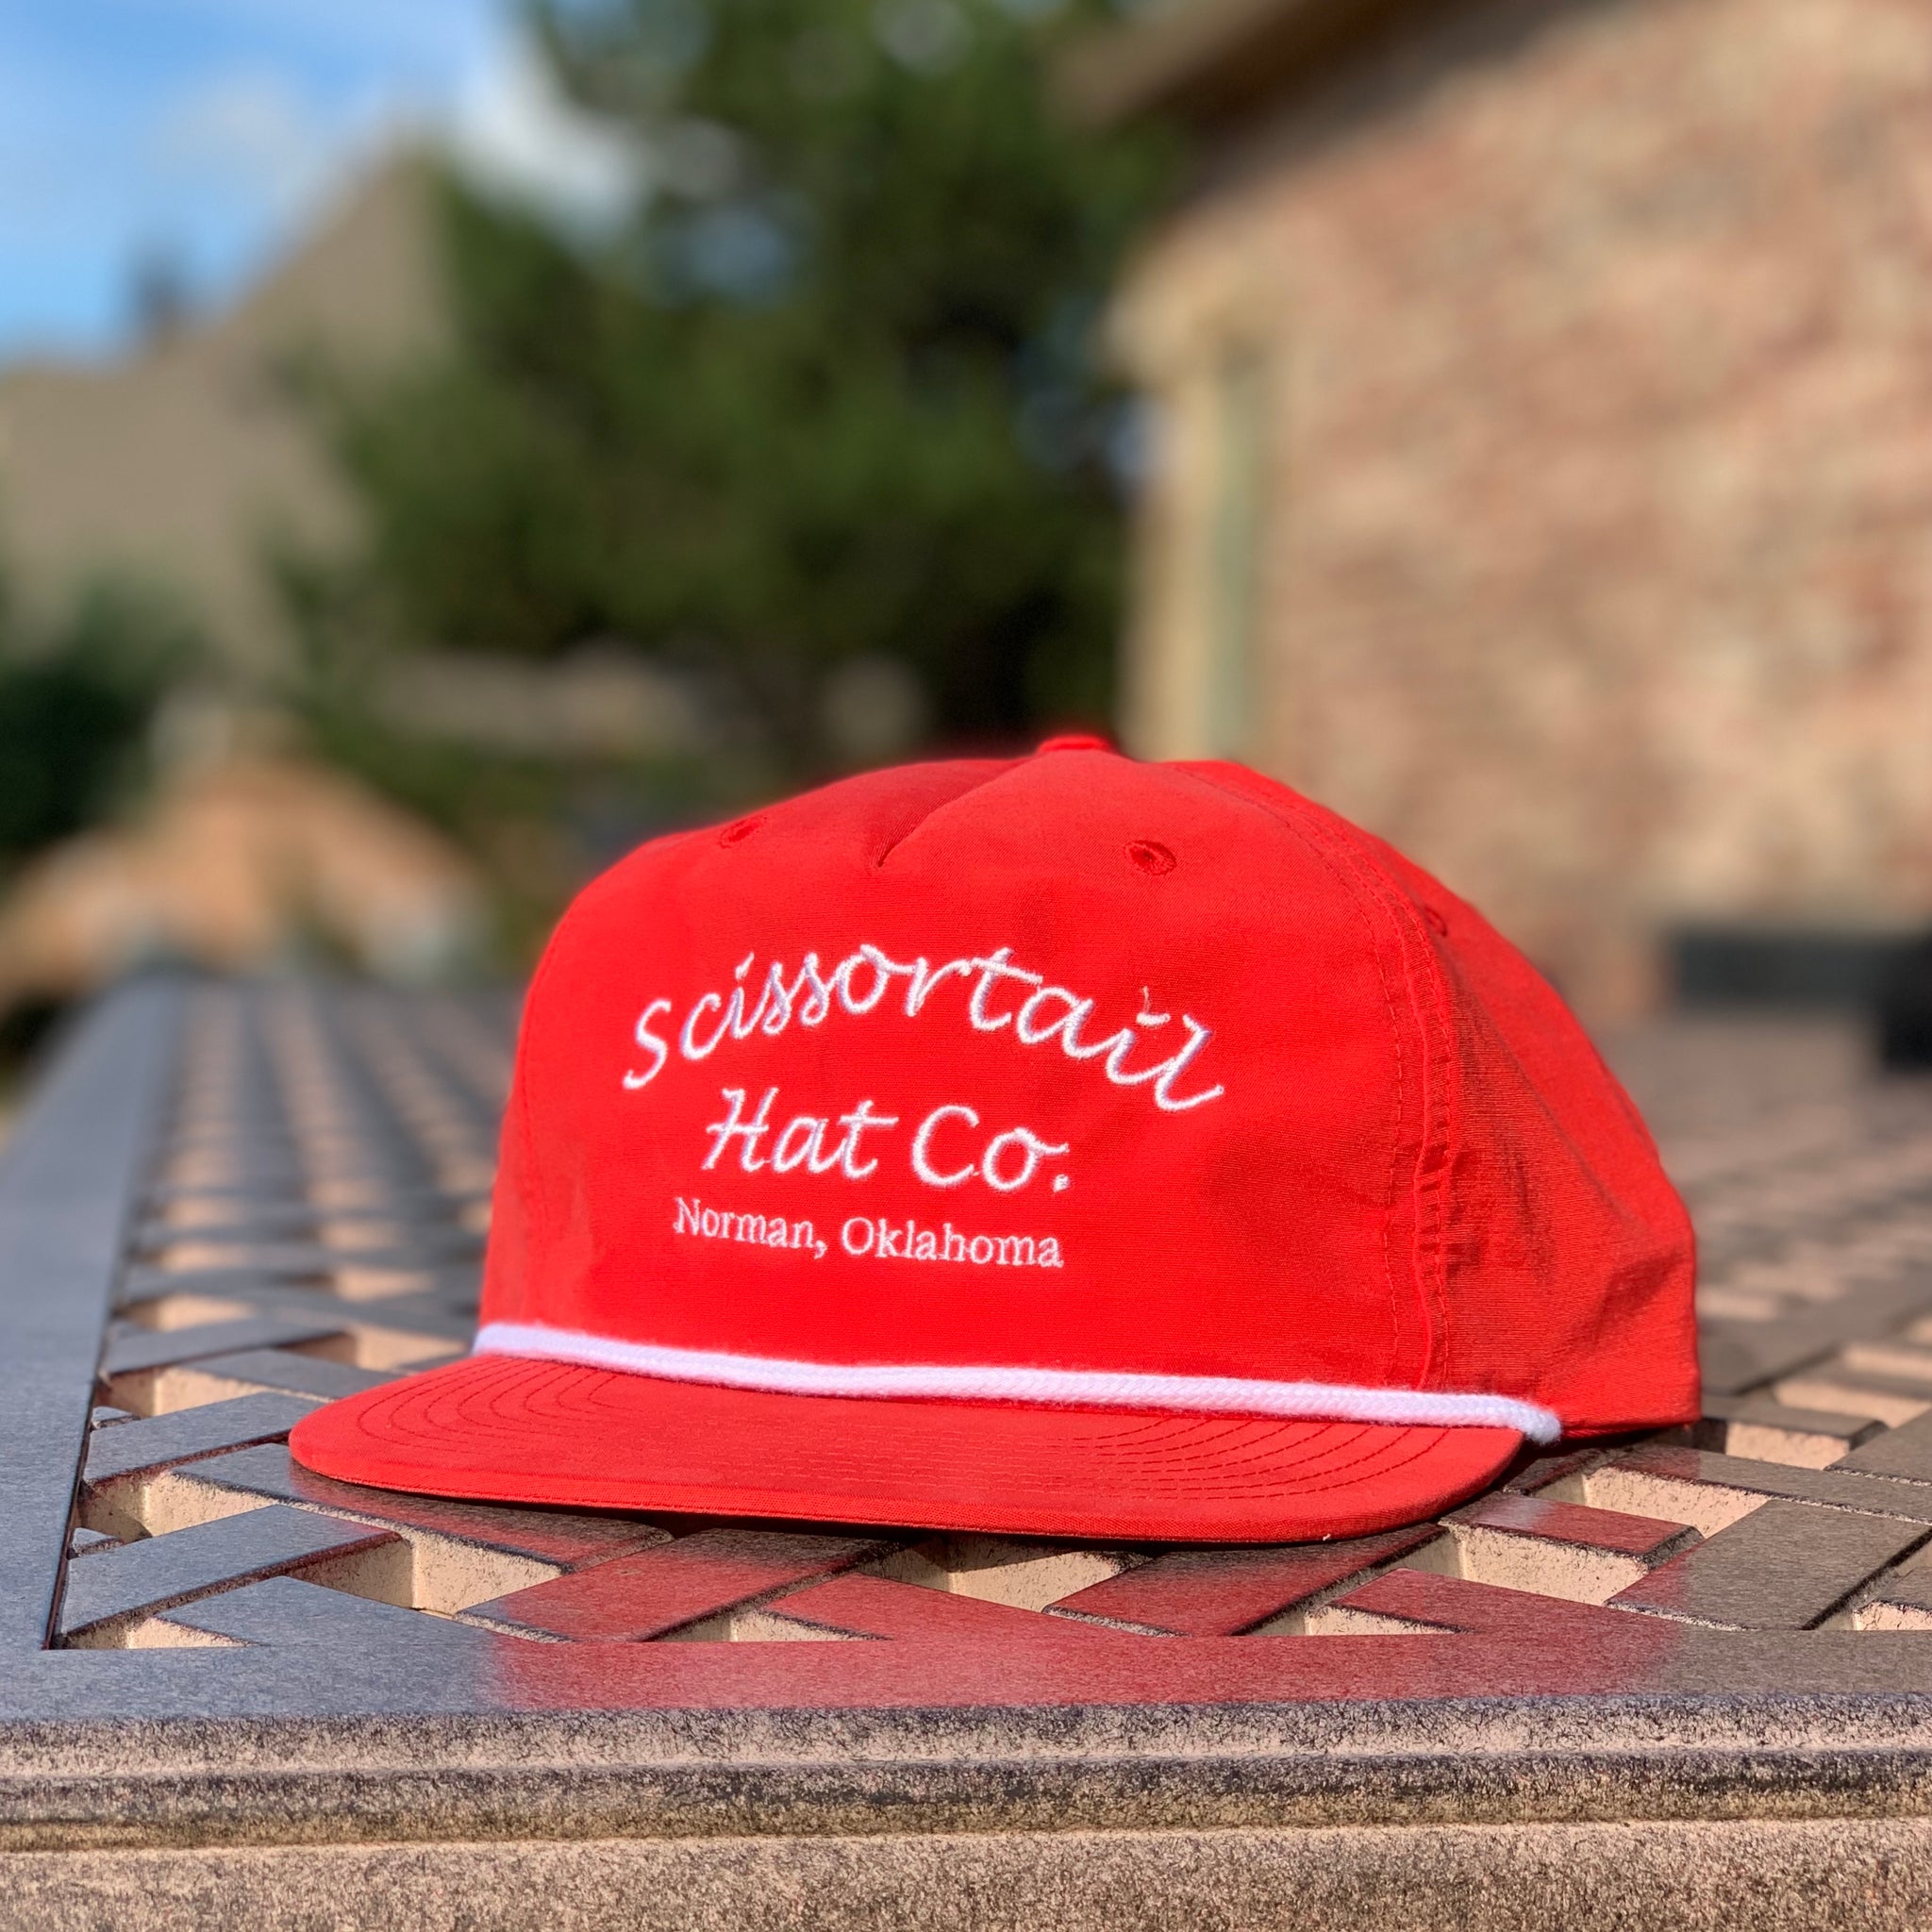 Gaylord - Scissortail Hat Company